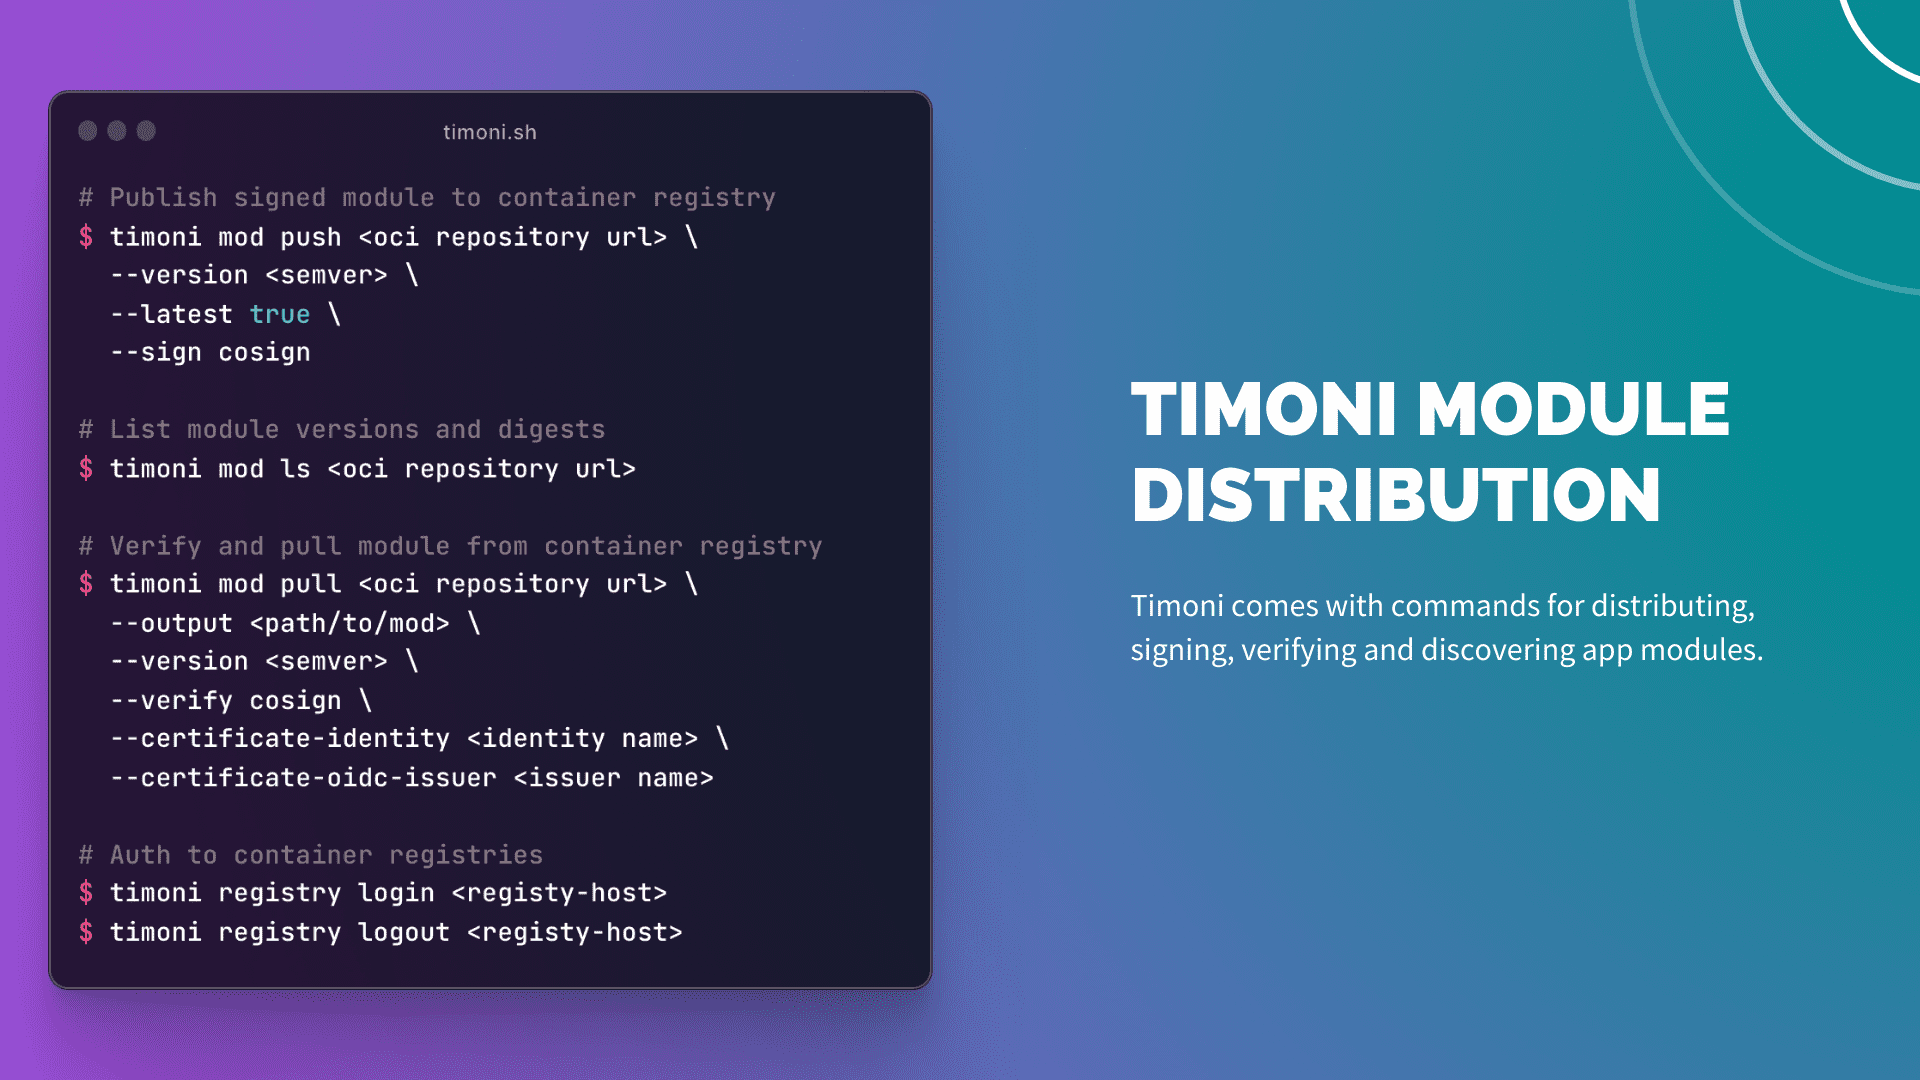 Timoni module distribution